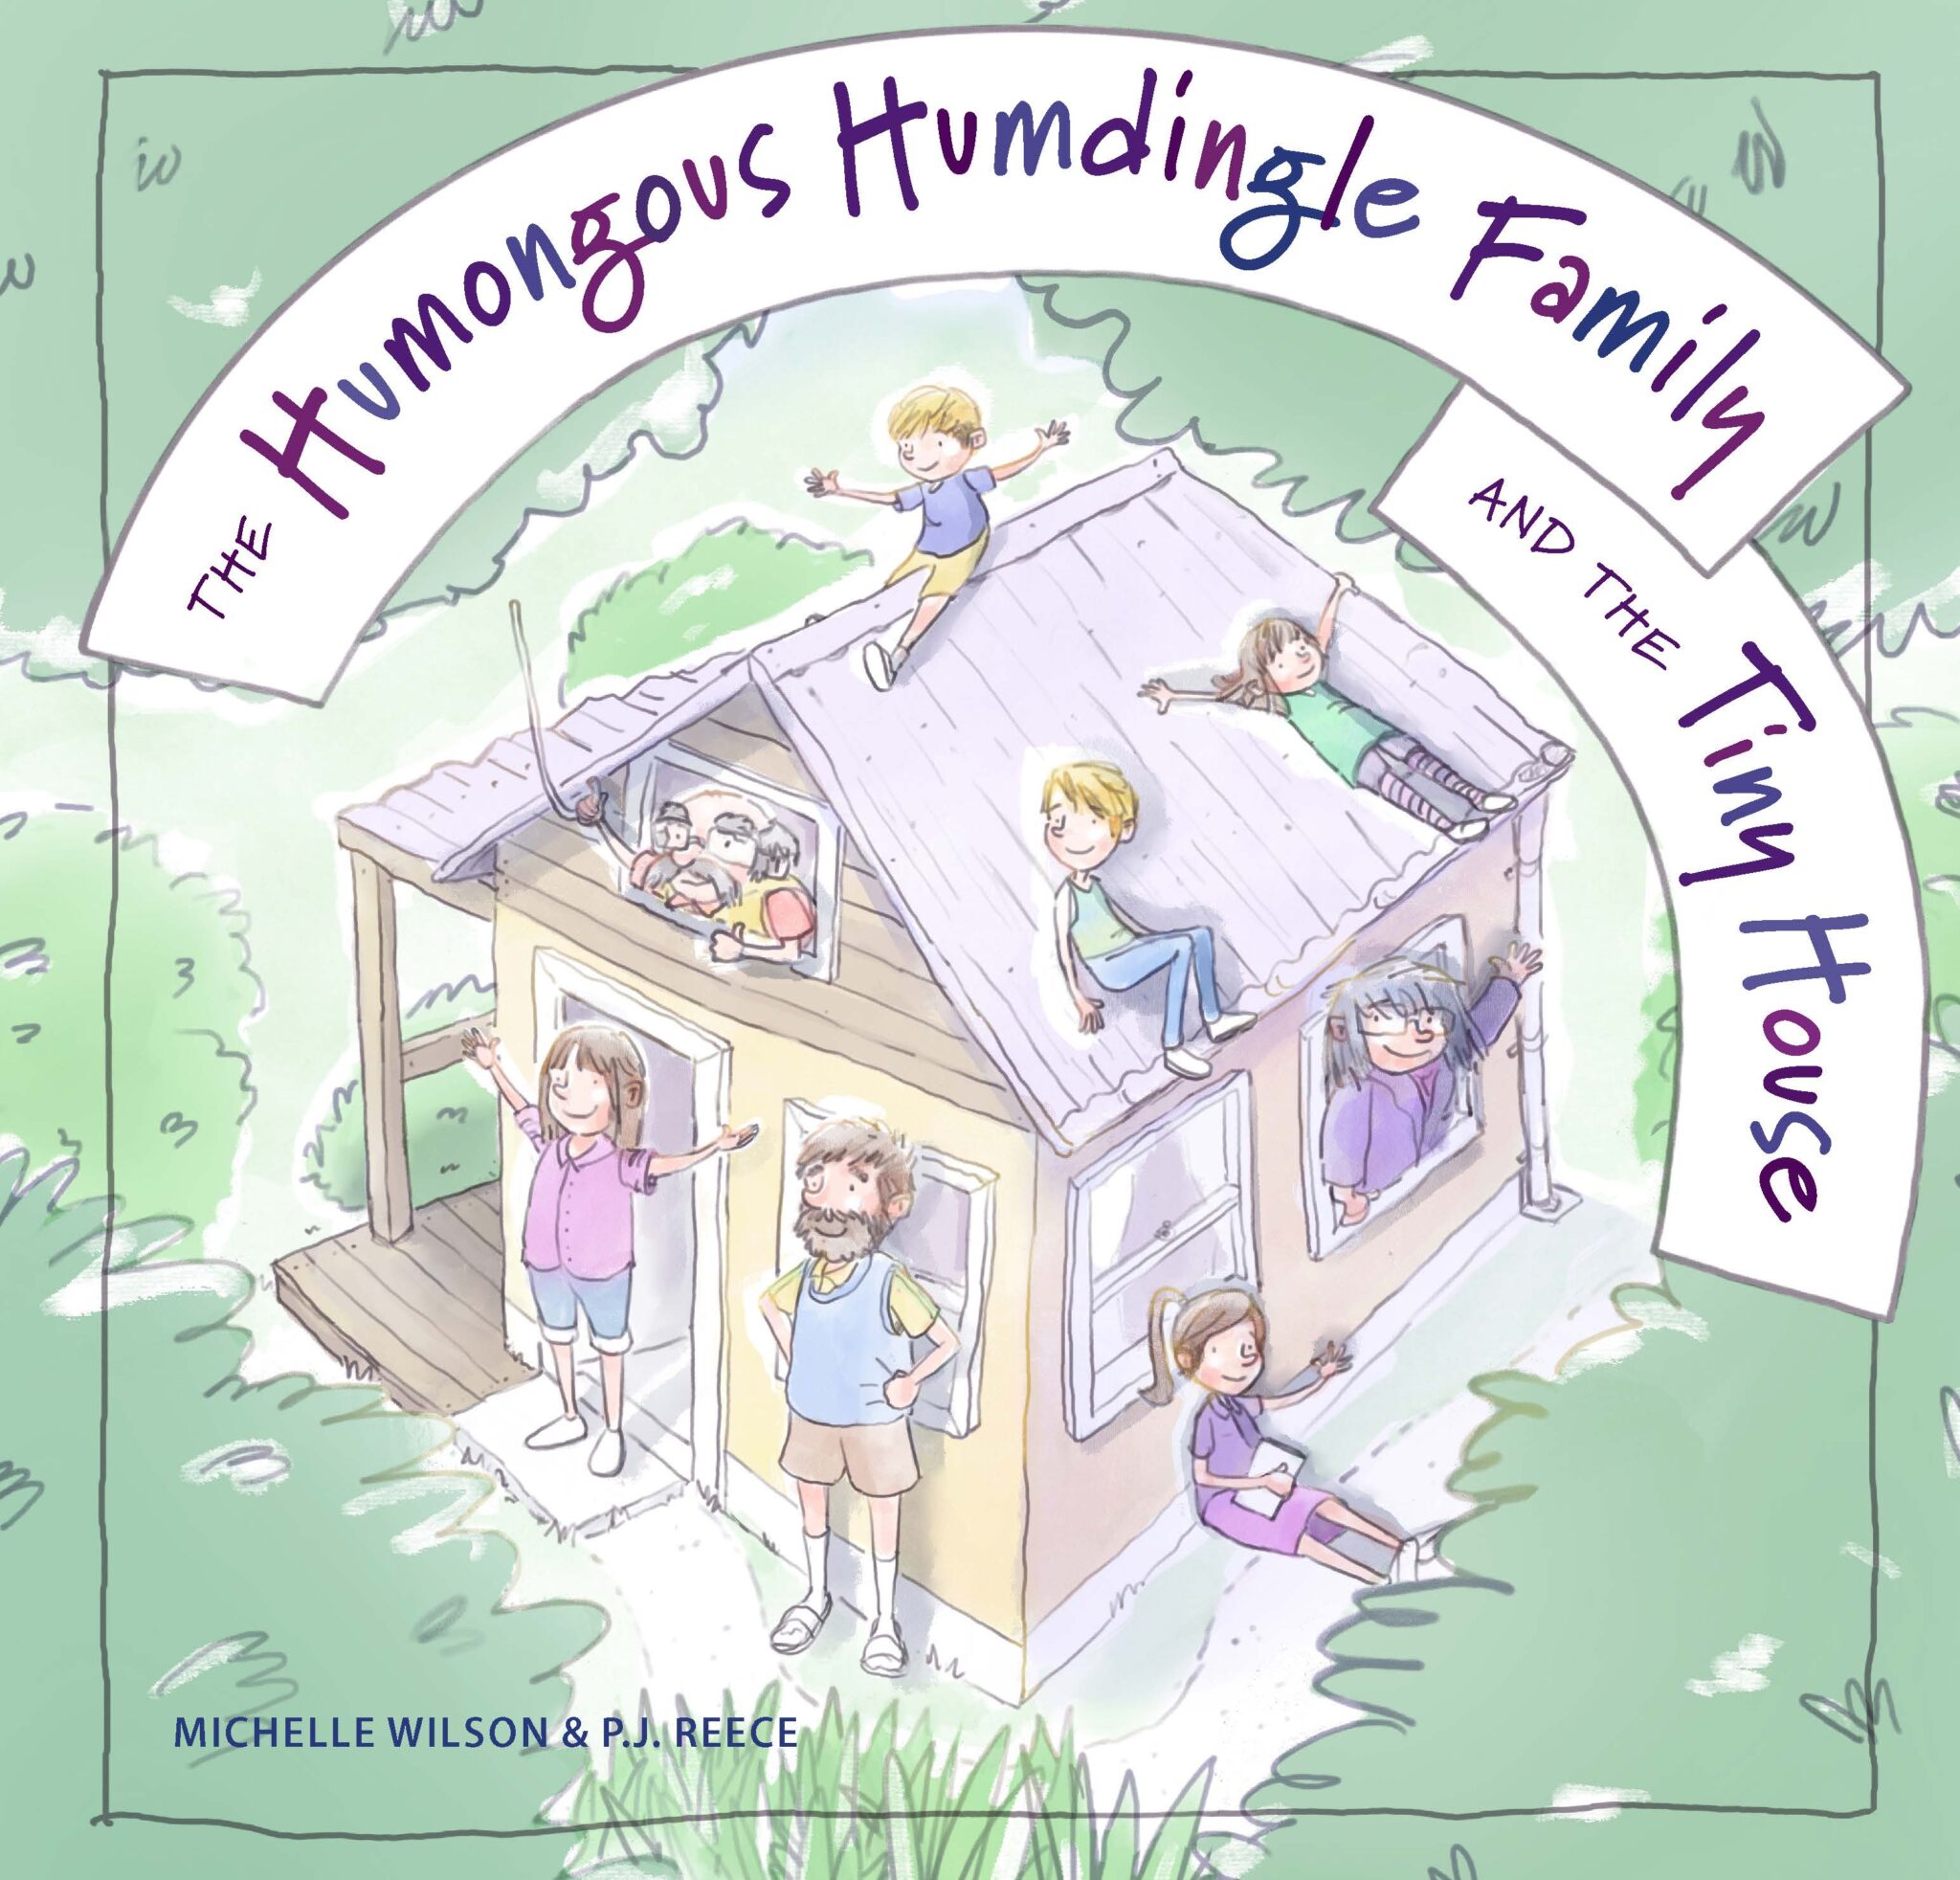 The Humongous Humdingle Family